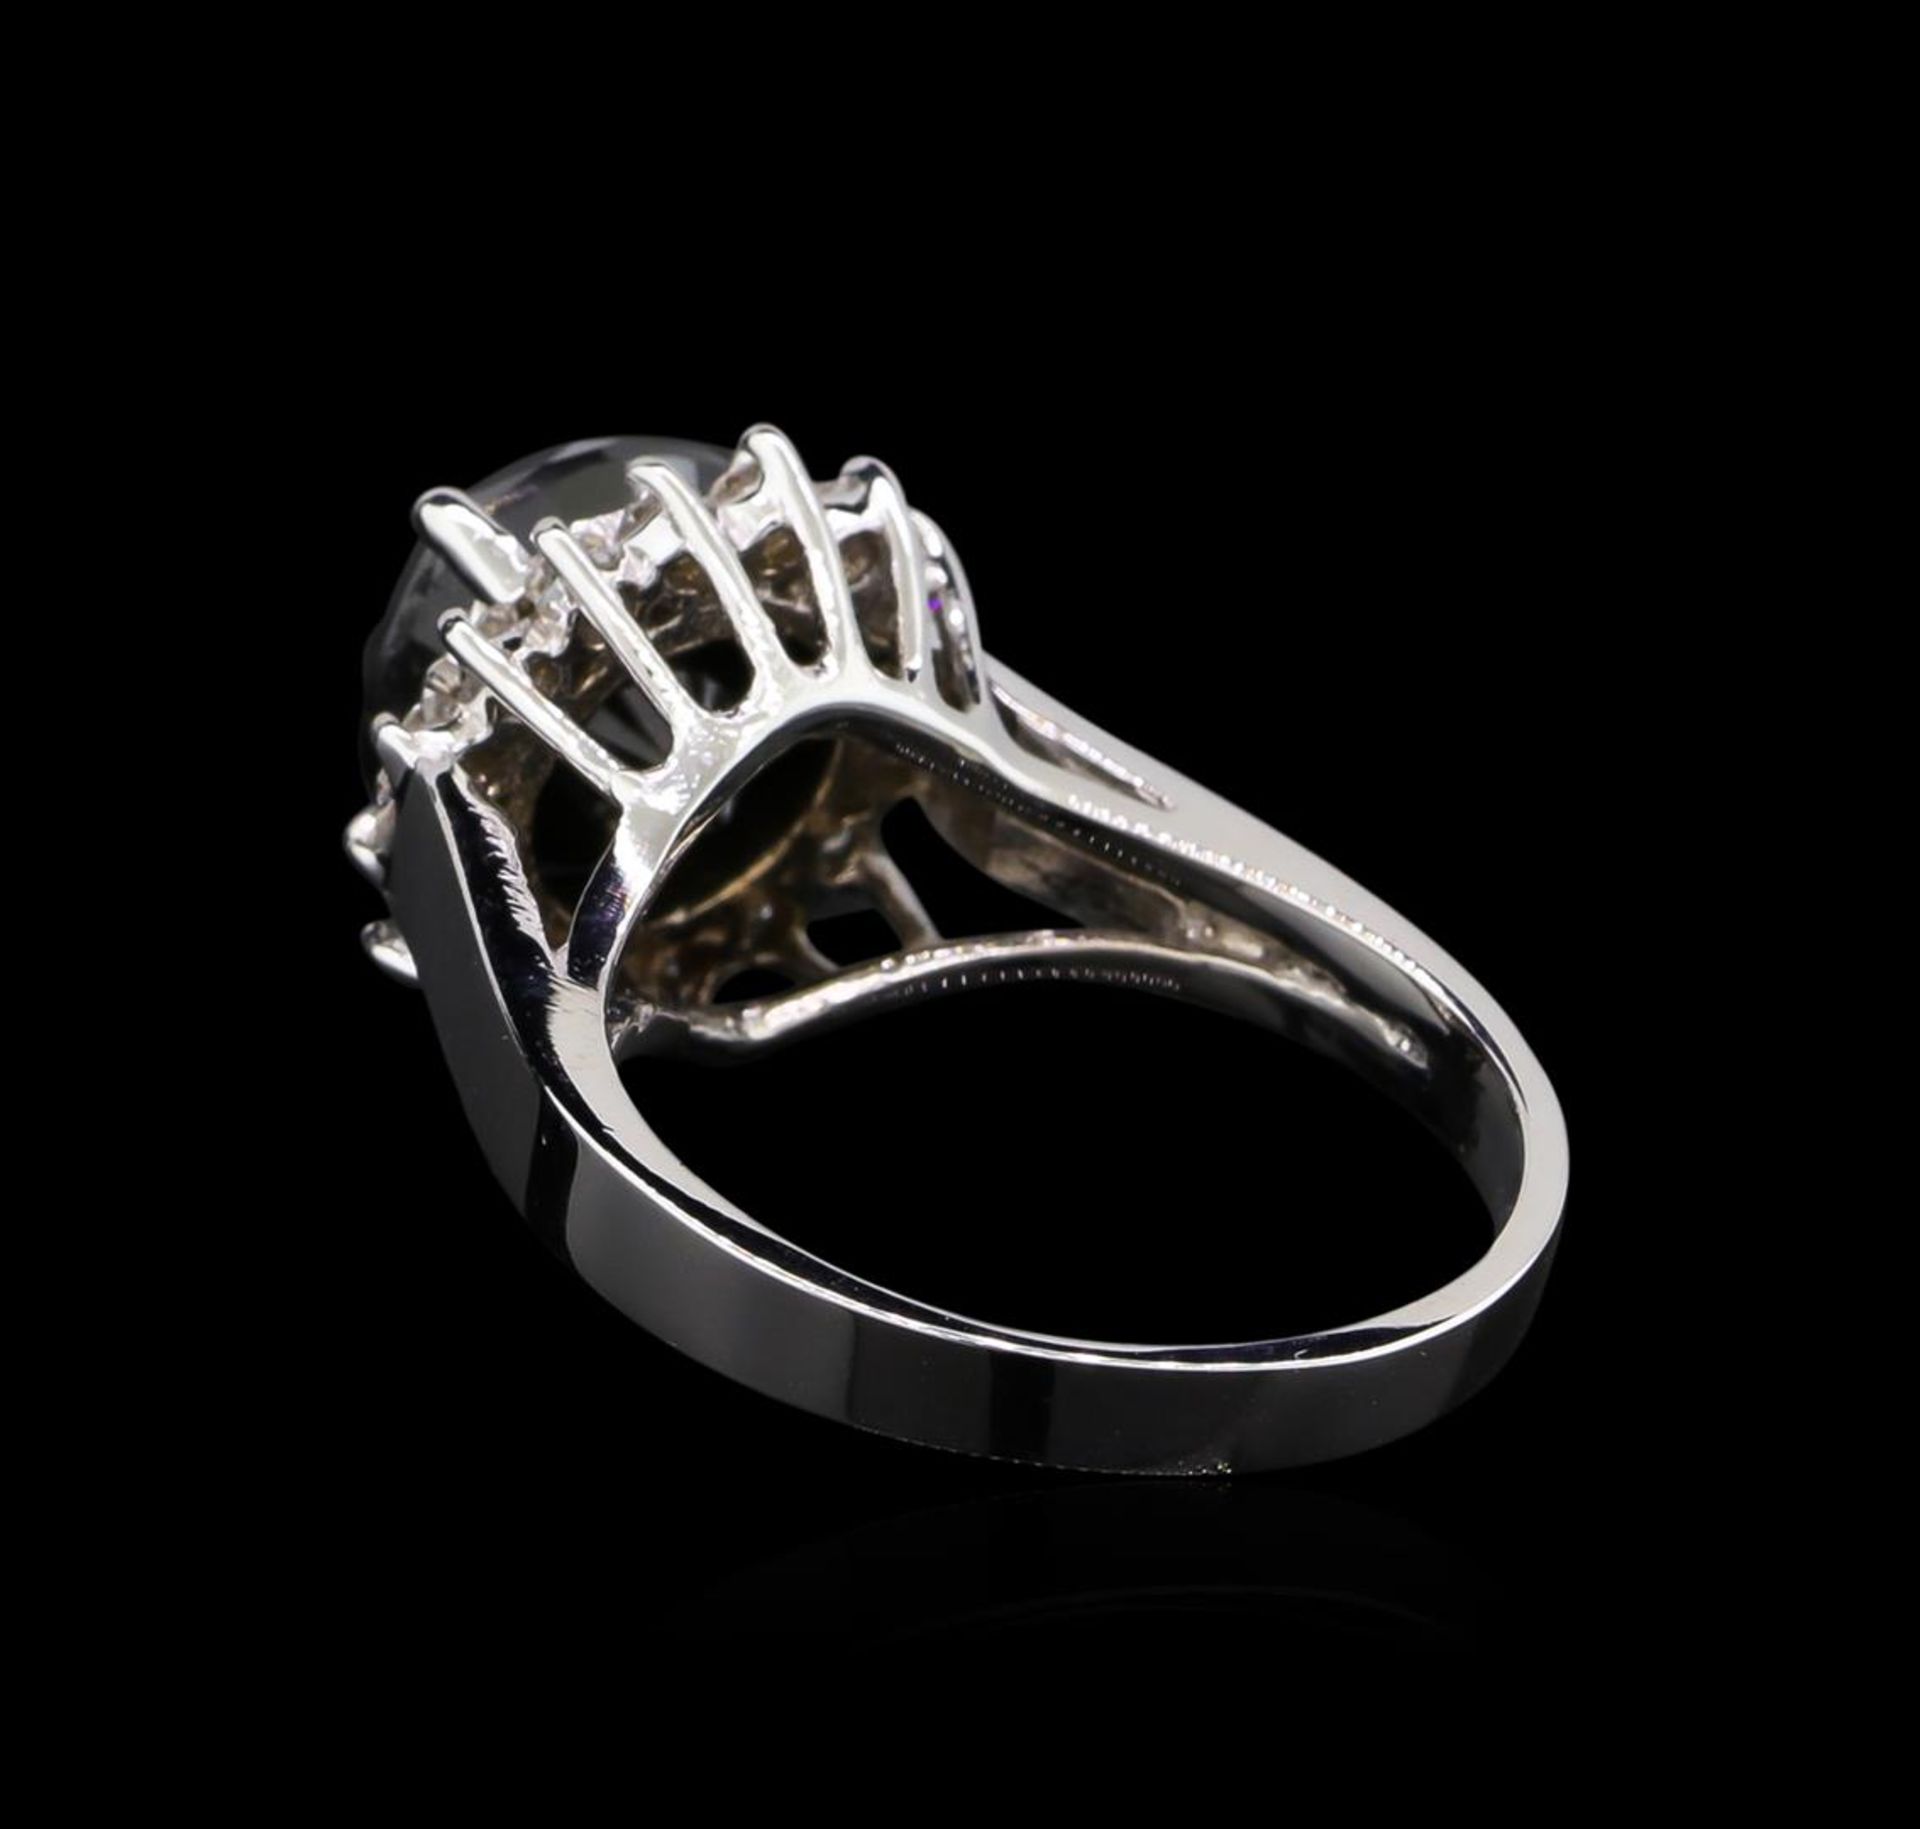 4.95 ctw Black Diamond Ring - 14KT White Gold - Image 3 of 4